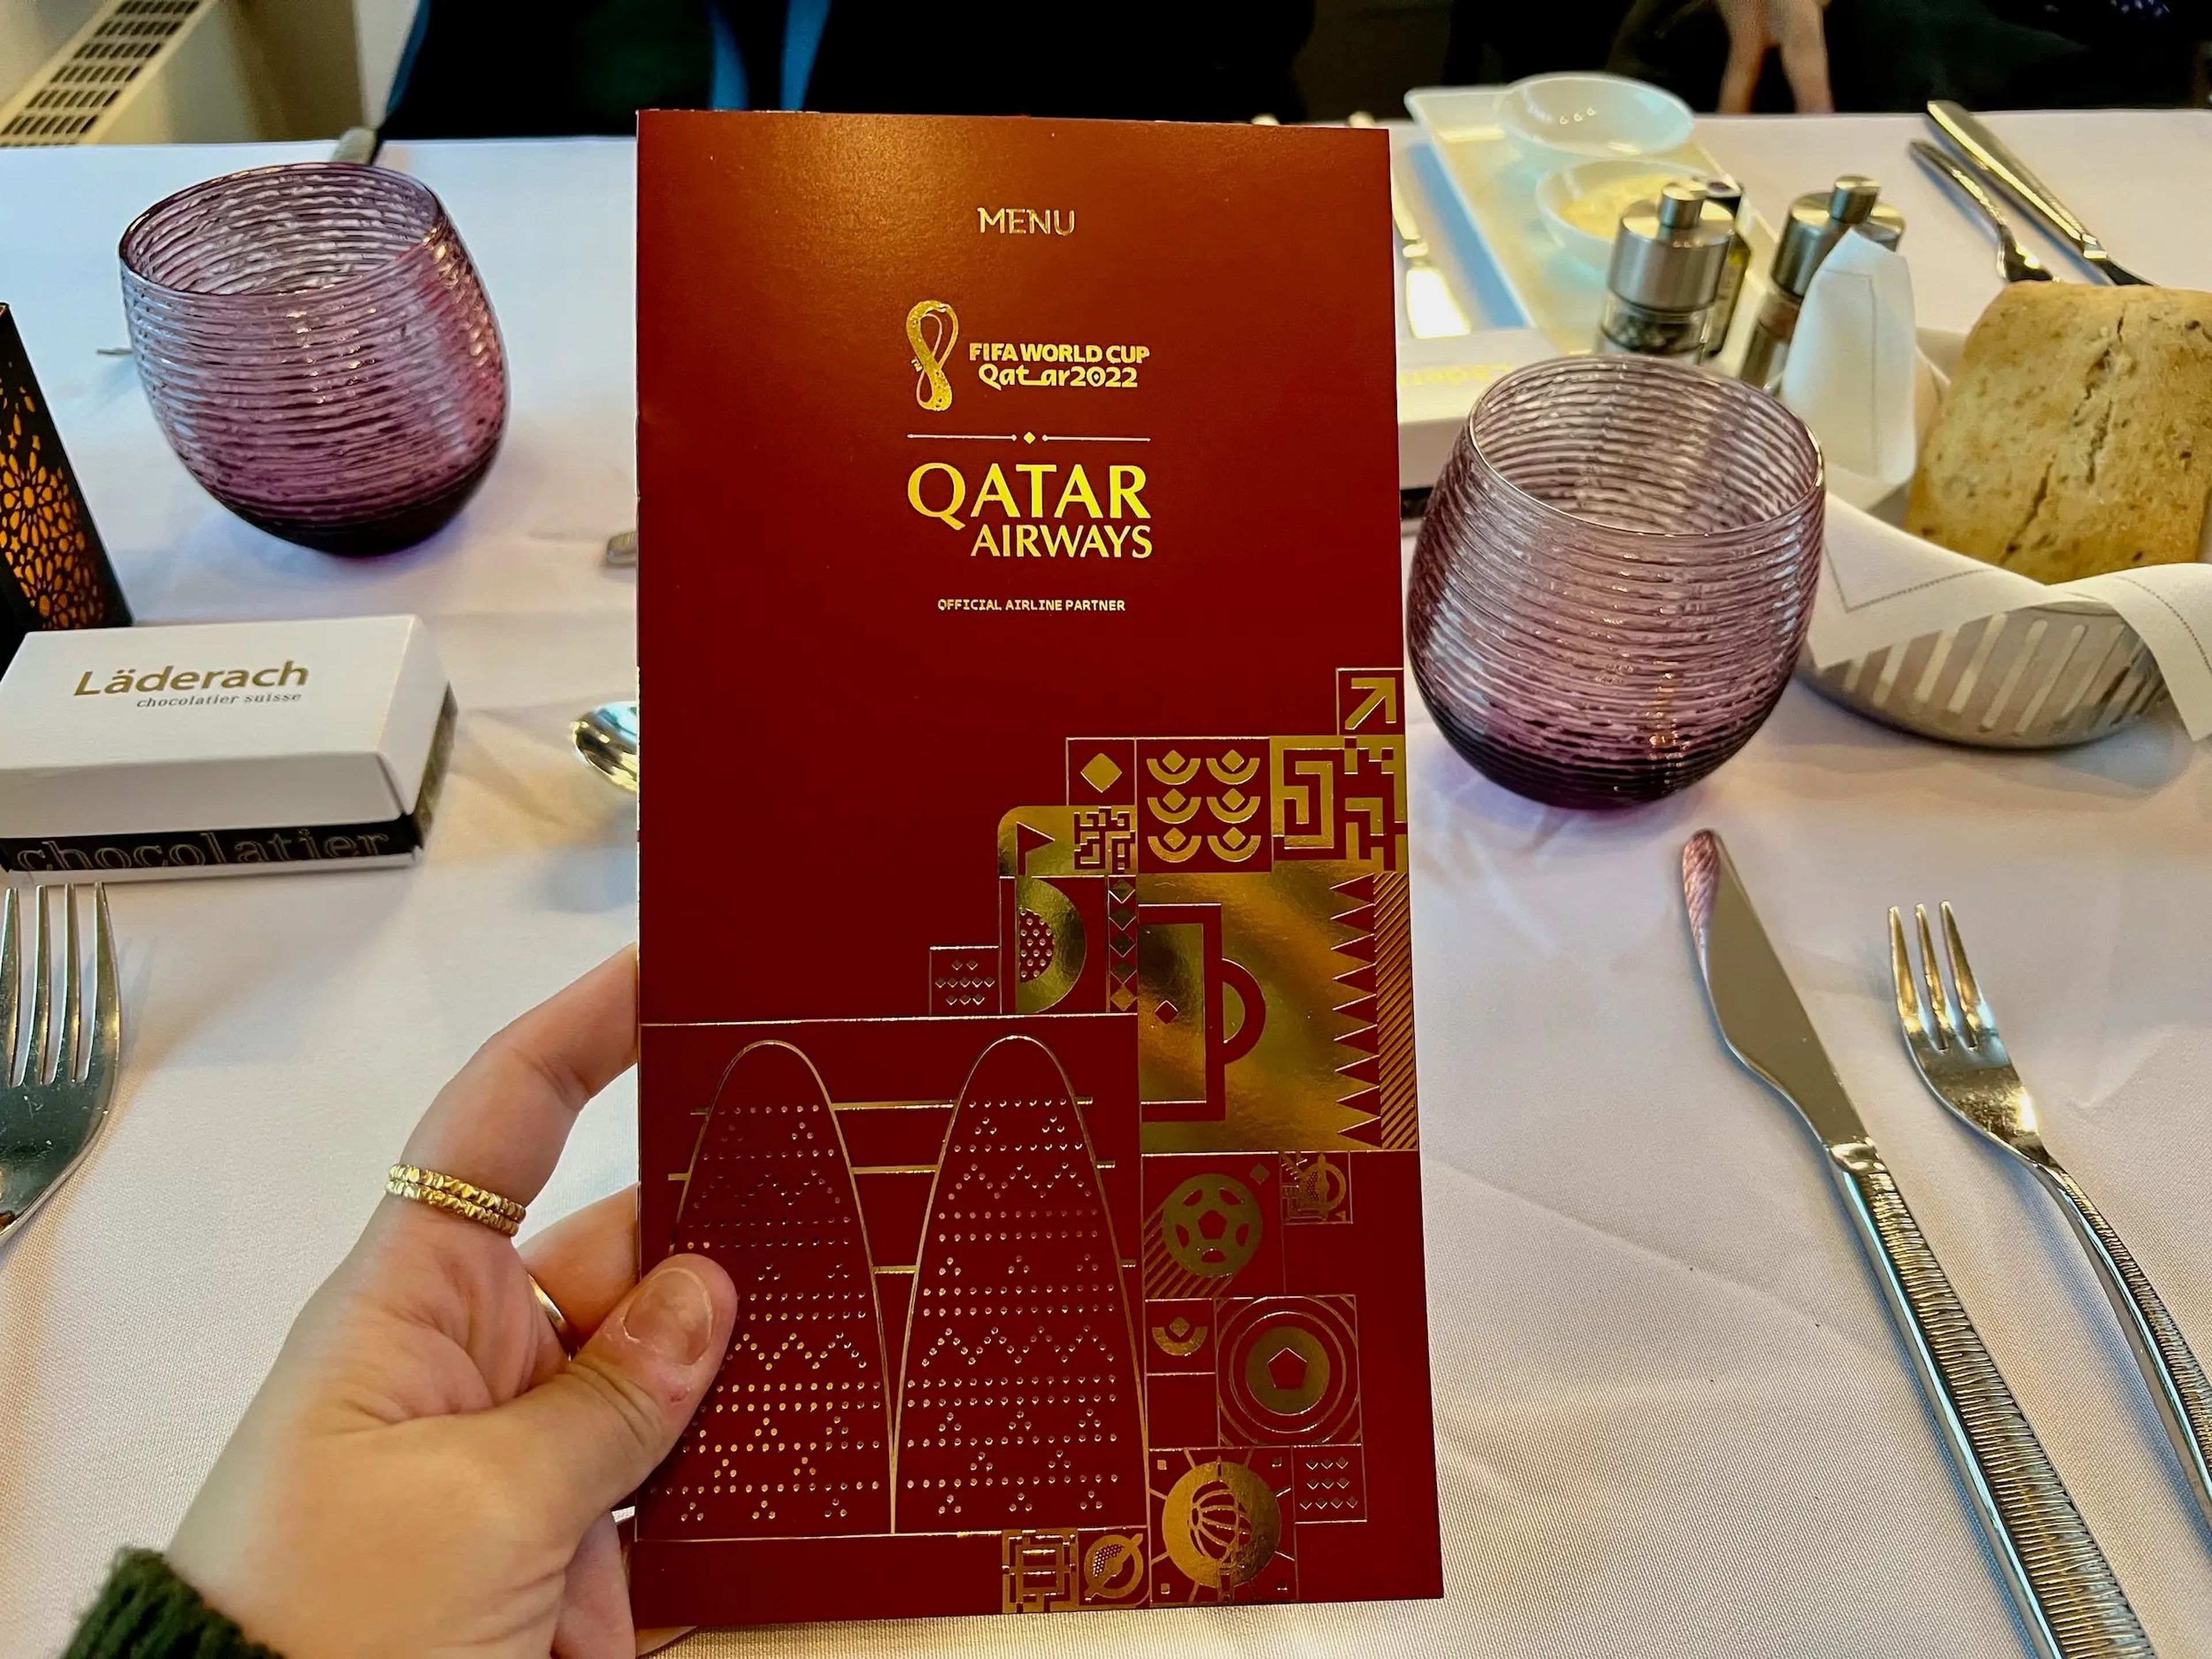 Qatar Airways' business class menu.